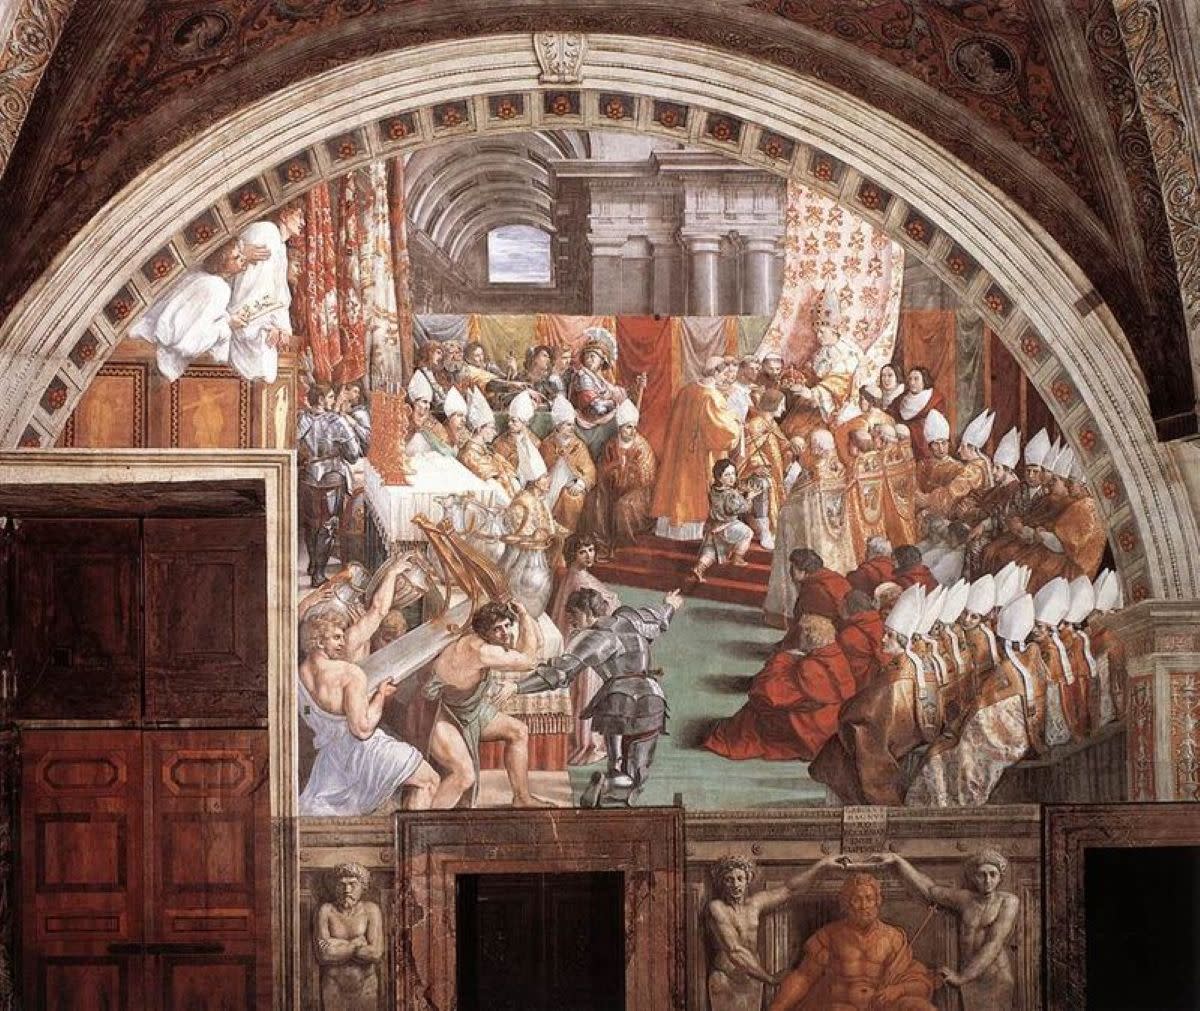 Raphael's depiction of Charlemagne's coronation. (c.1515-1516).